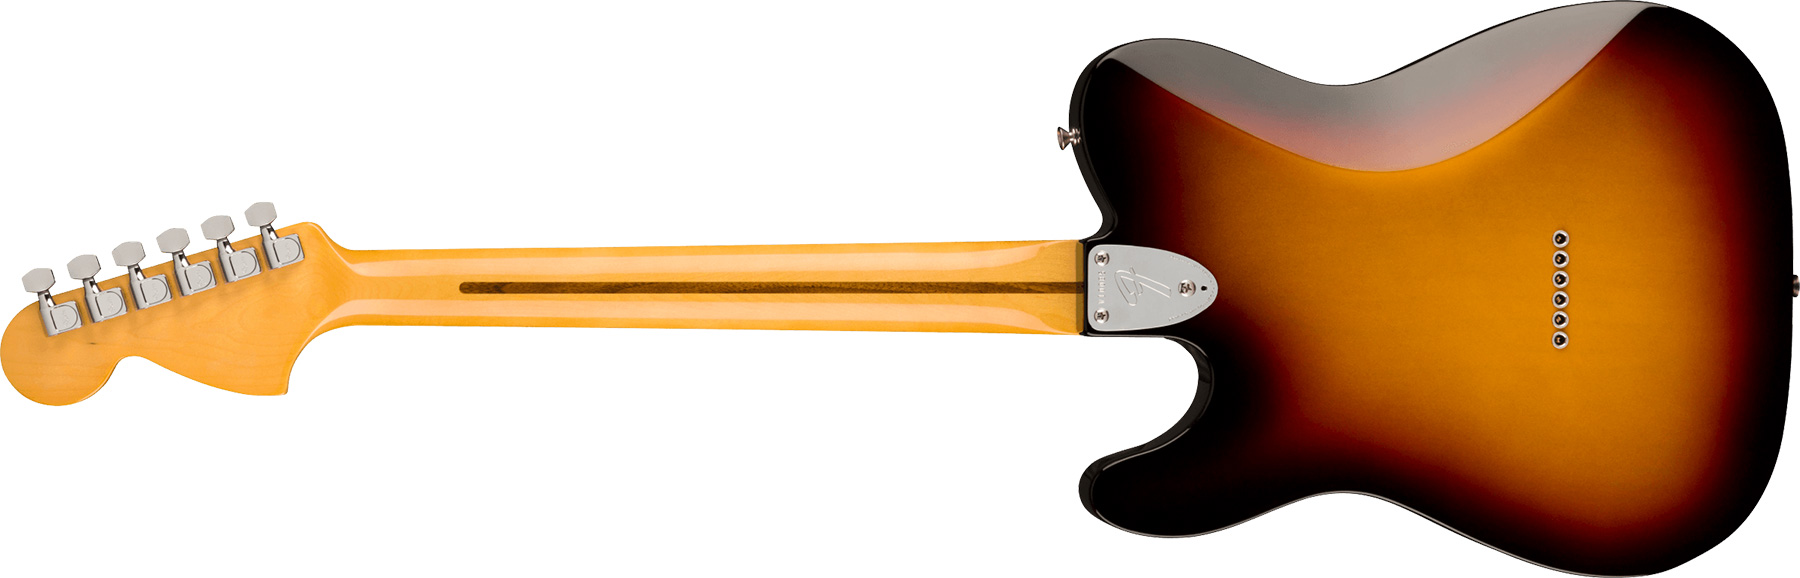 Fender Tele Deluxe 1975 American Vintage Ii Usa 2h Ht Mn - 3-color Sunburst - Guitare Électrique Forme Tel - Variation 1